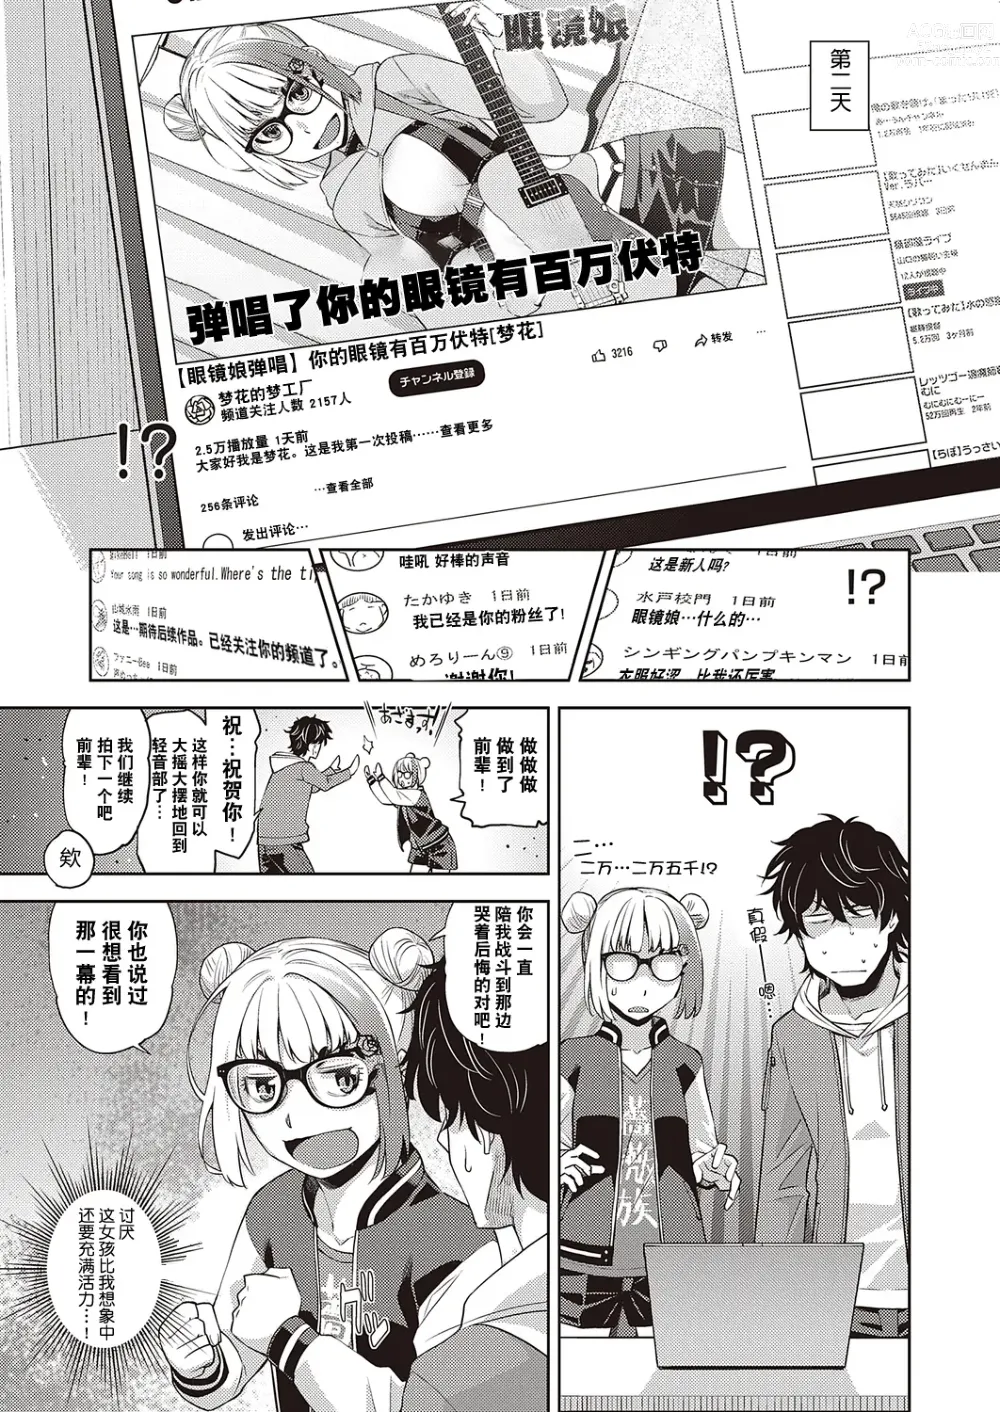 Page 7 of manga Houkago Megane Club